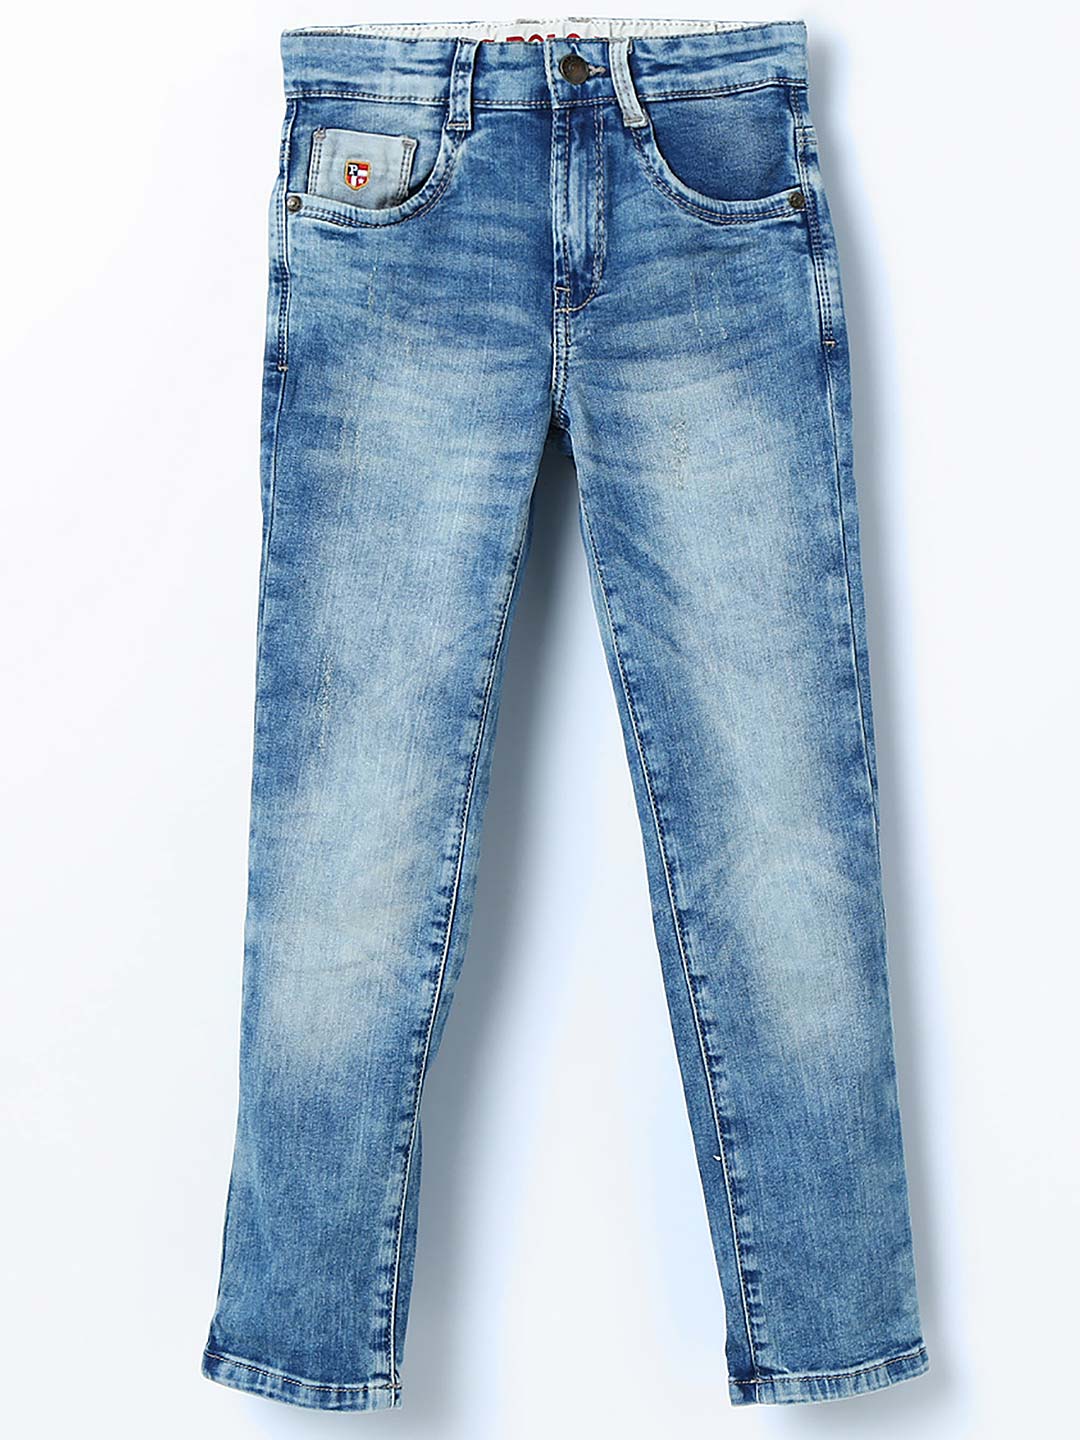 polo blue jeans